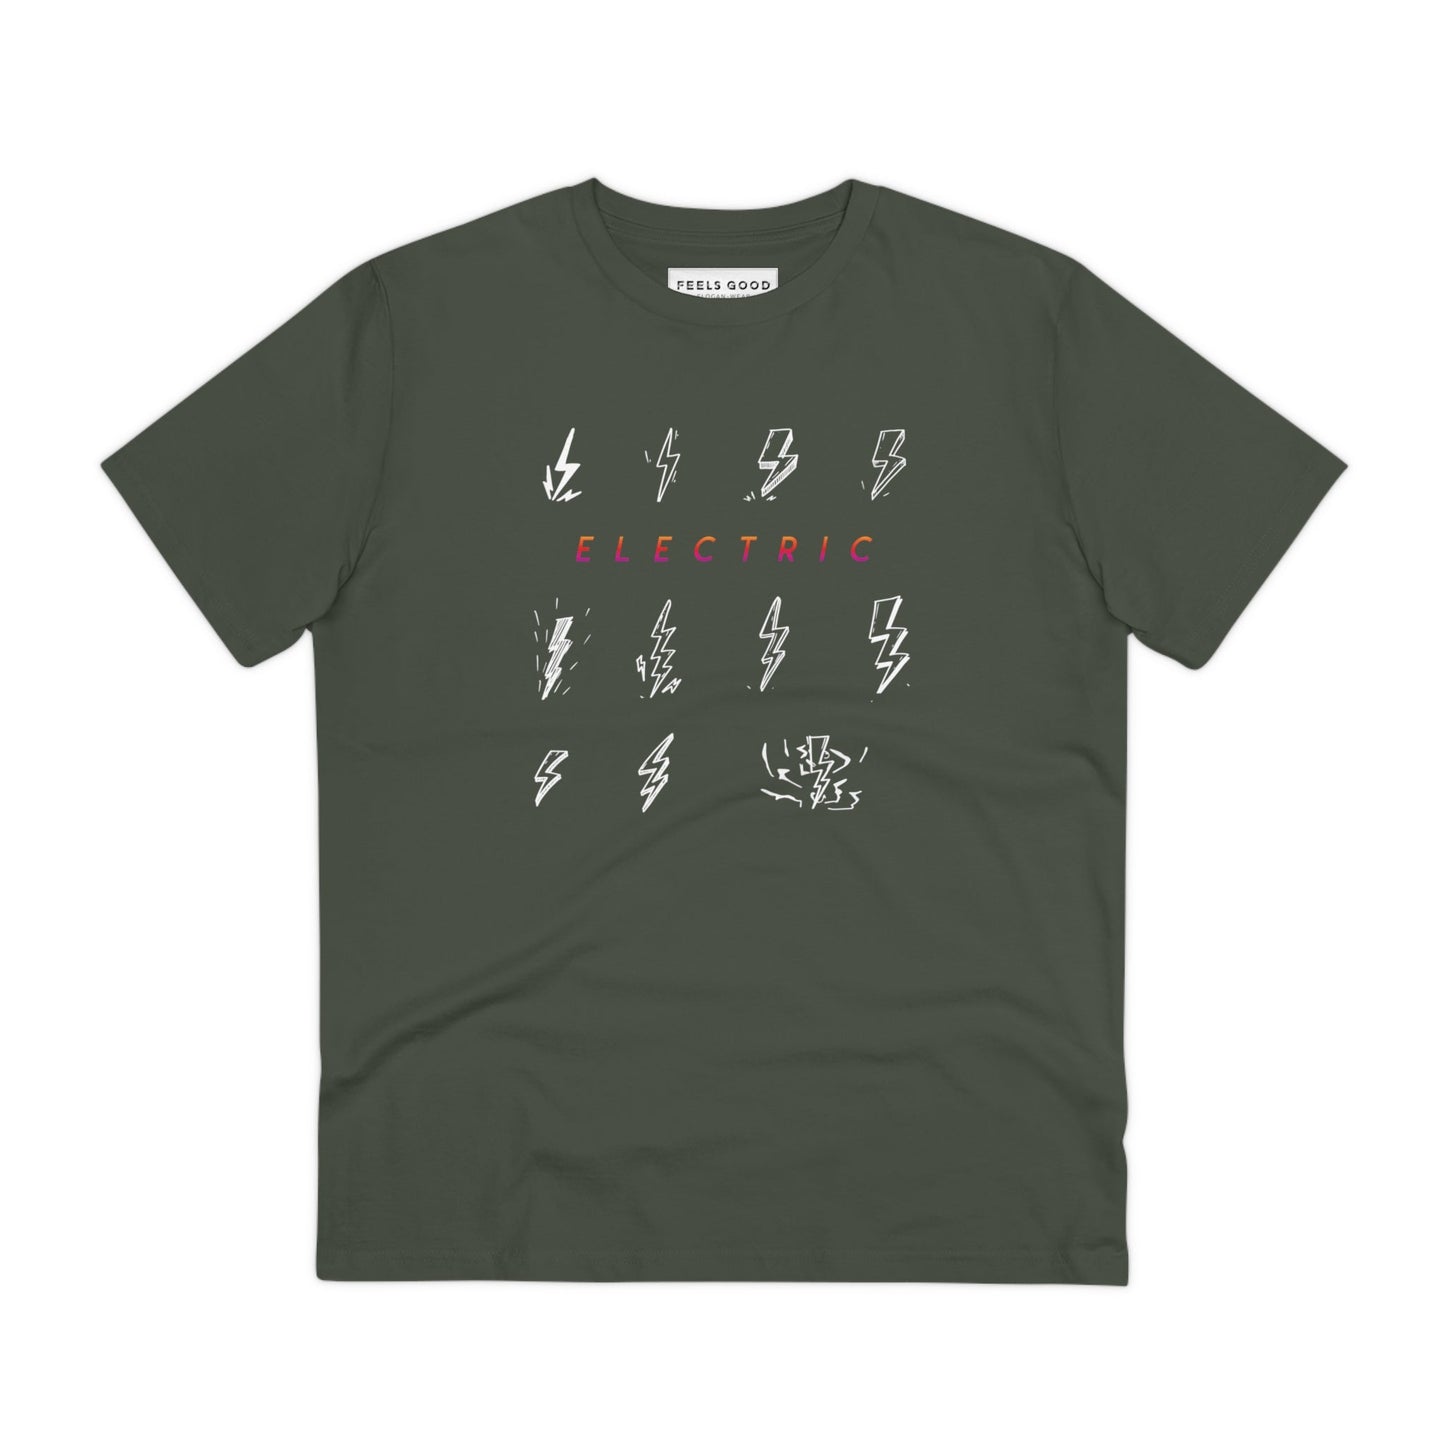 Contemporary 'Electric' Organic Cotton T-shirt - Electric Tshirt